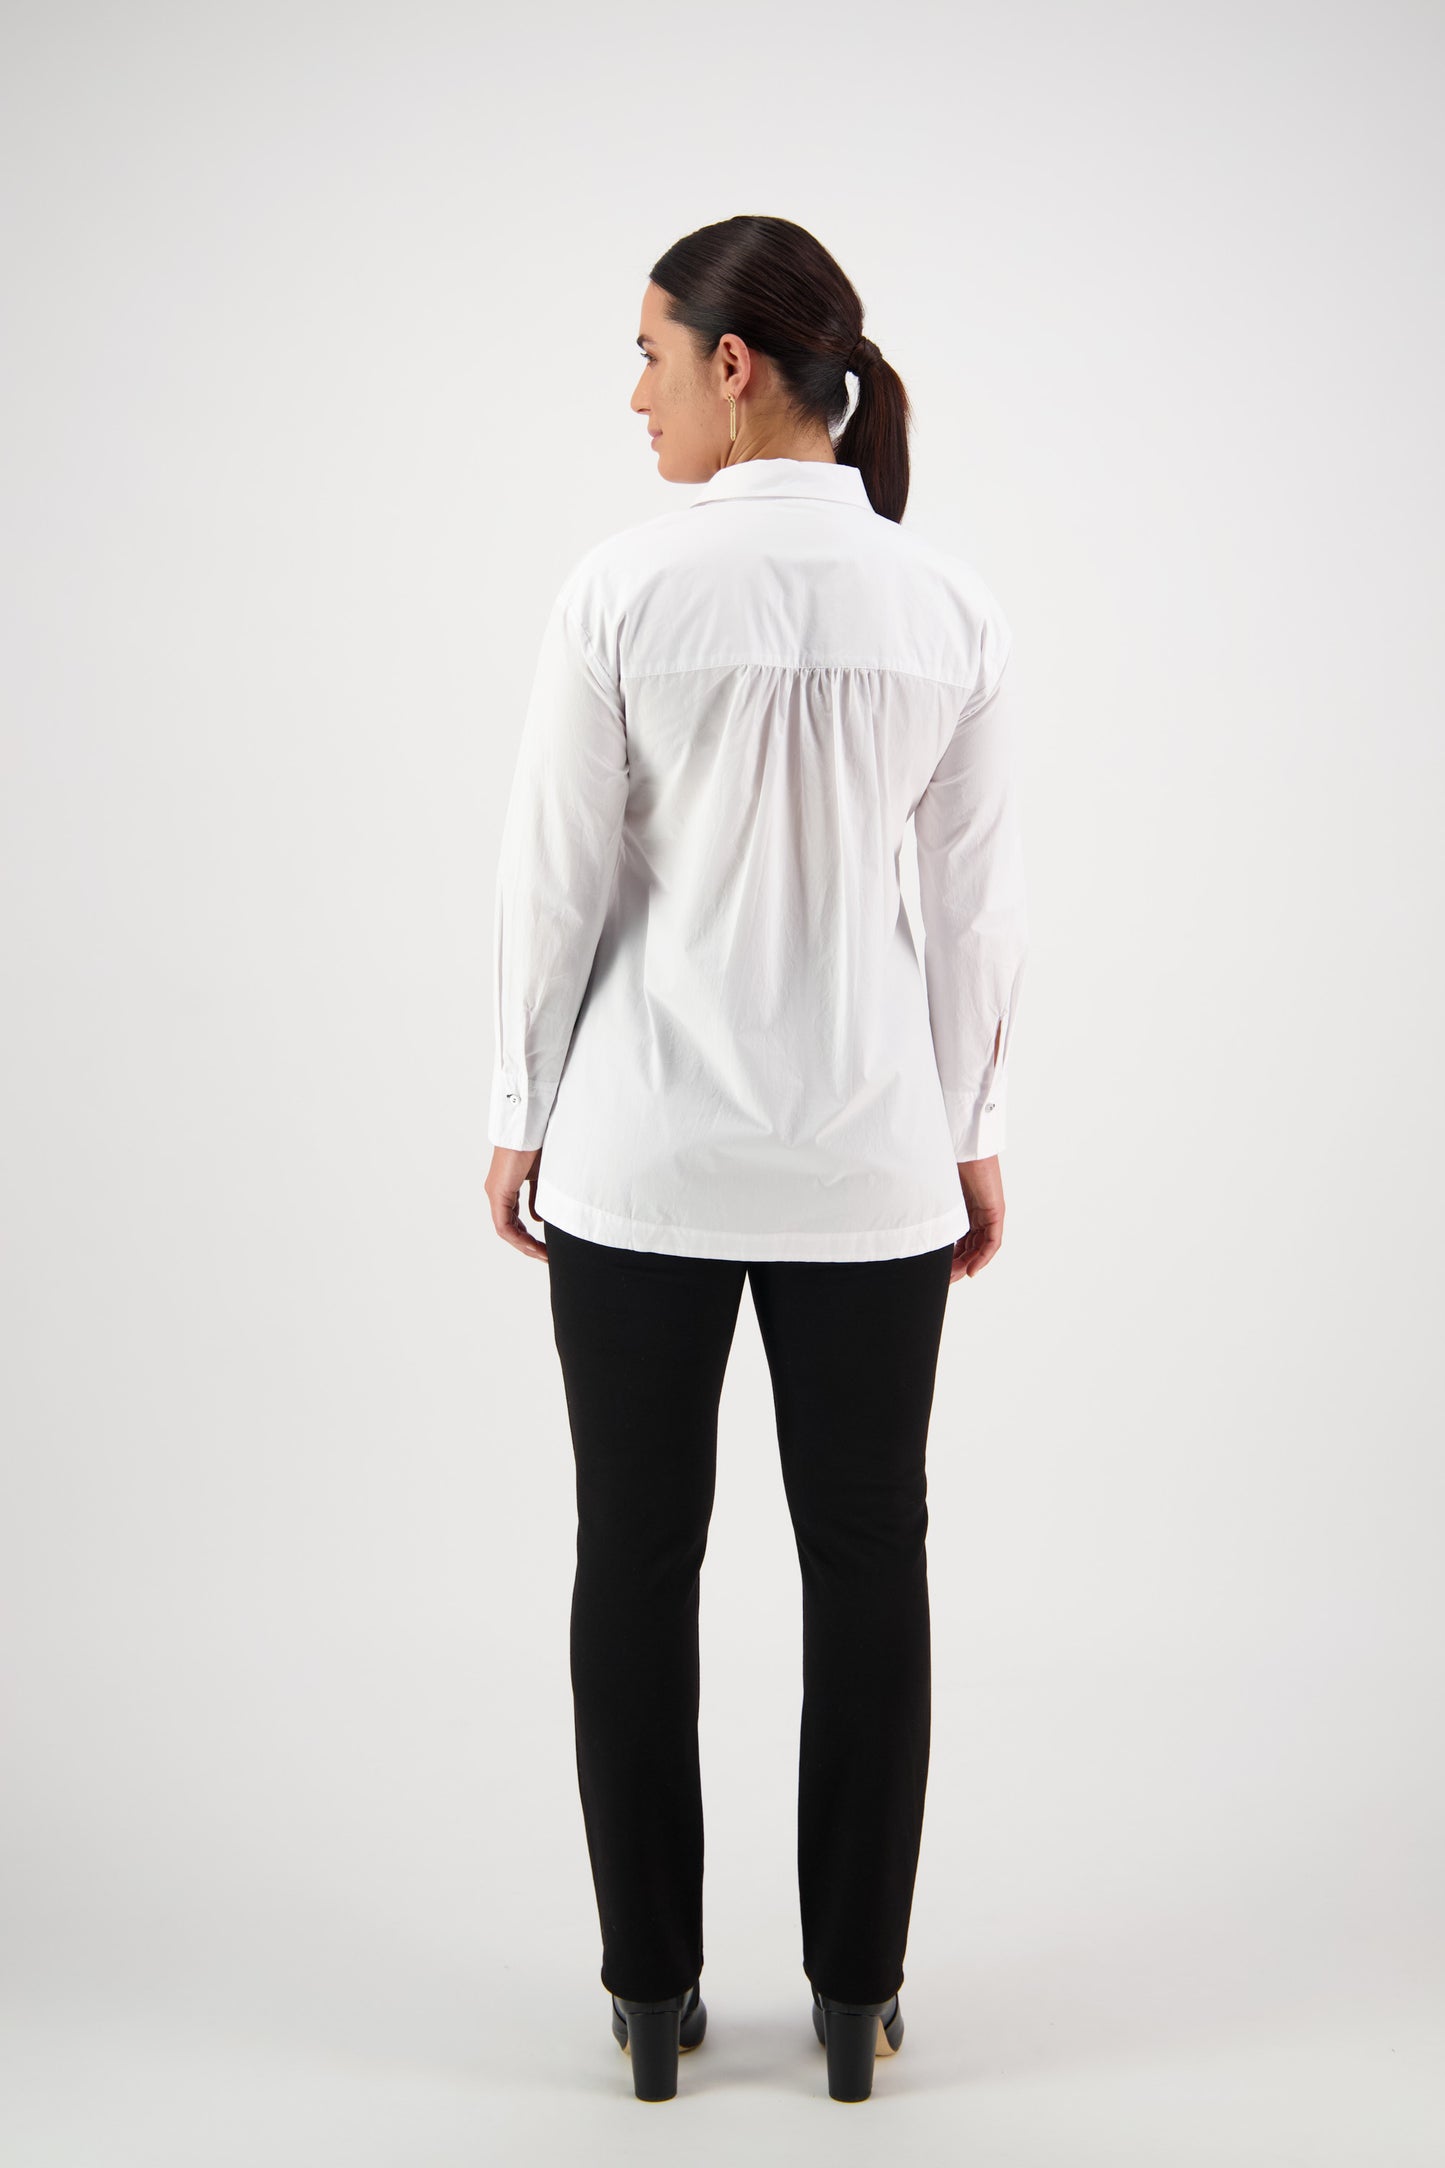 Vassalli - 4441 Shirt with Contrast Stitching - White/Ink - INSTORE